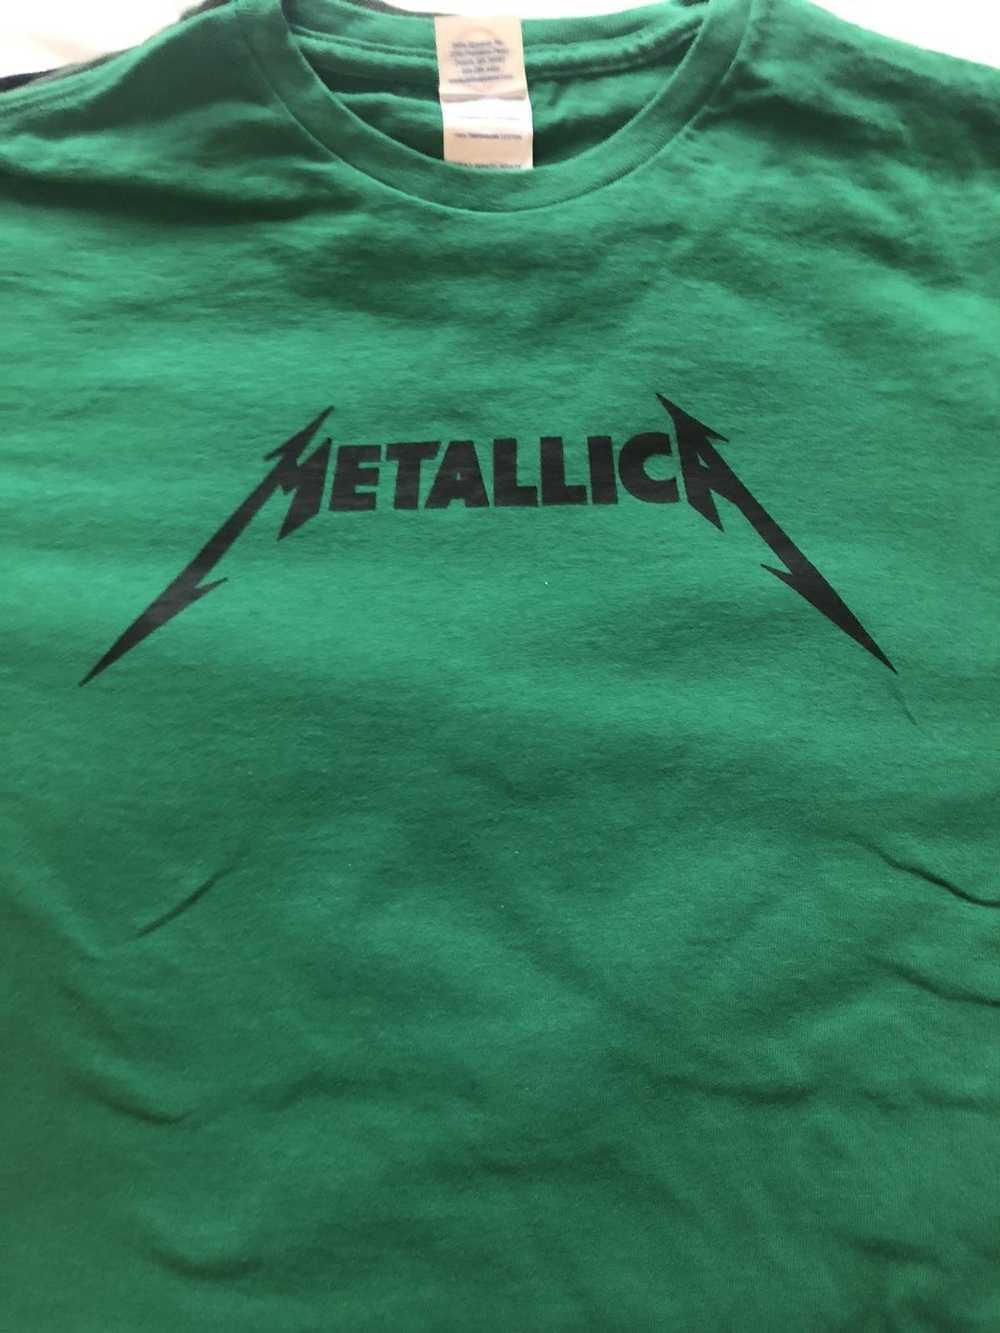 Metallica Skull Snake San Francisco Giants Logo MLB Shirt - Limotees